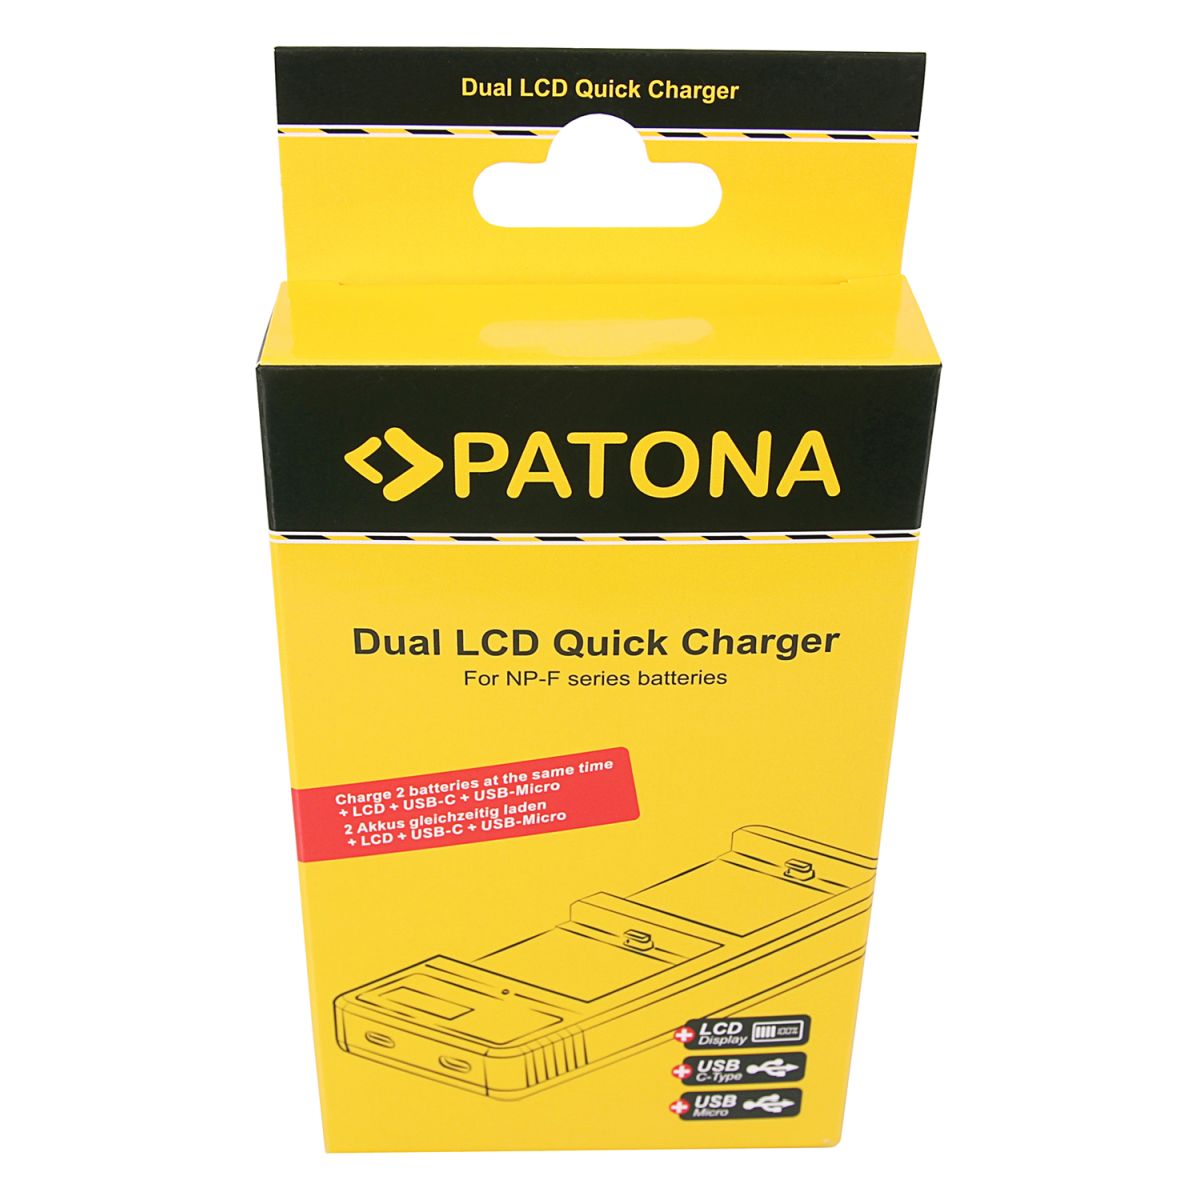 Patona Dual LCD USB Ladegerät Panasonic DMW-BLK22